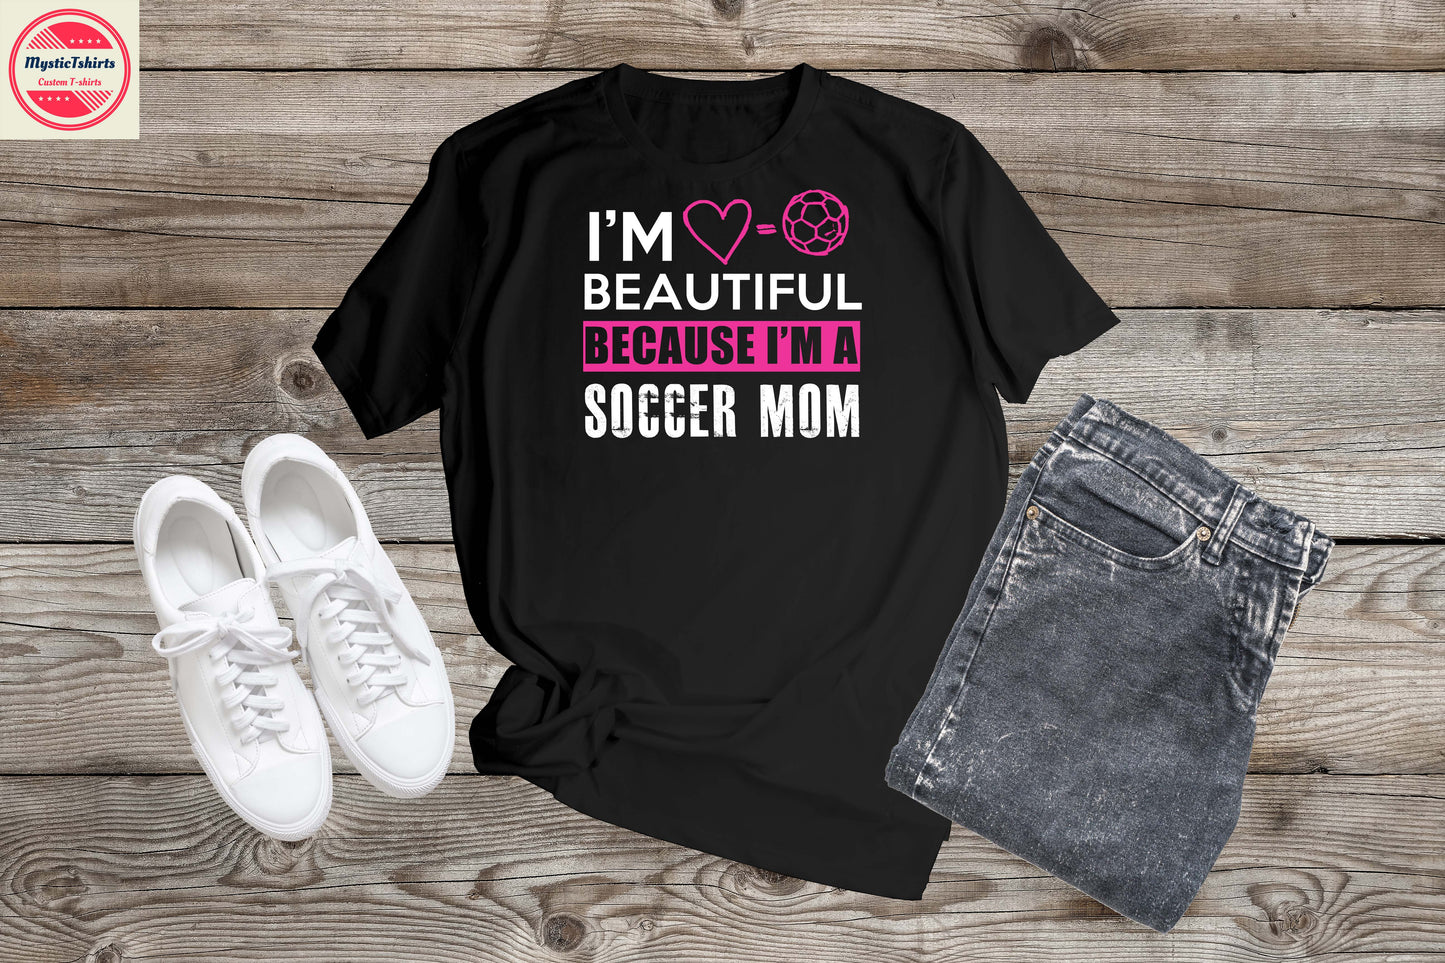 438. SOCCER MOM, Custom Made Shirt, Personalized T-Shirt, Custom Text, Make Your Own Shirt, Custom Tee